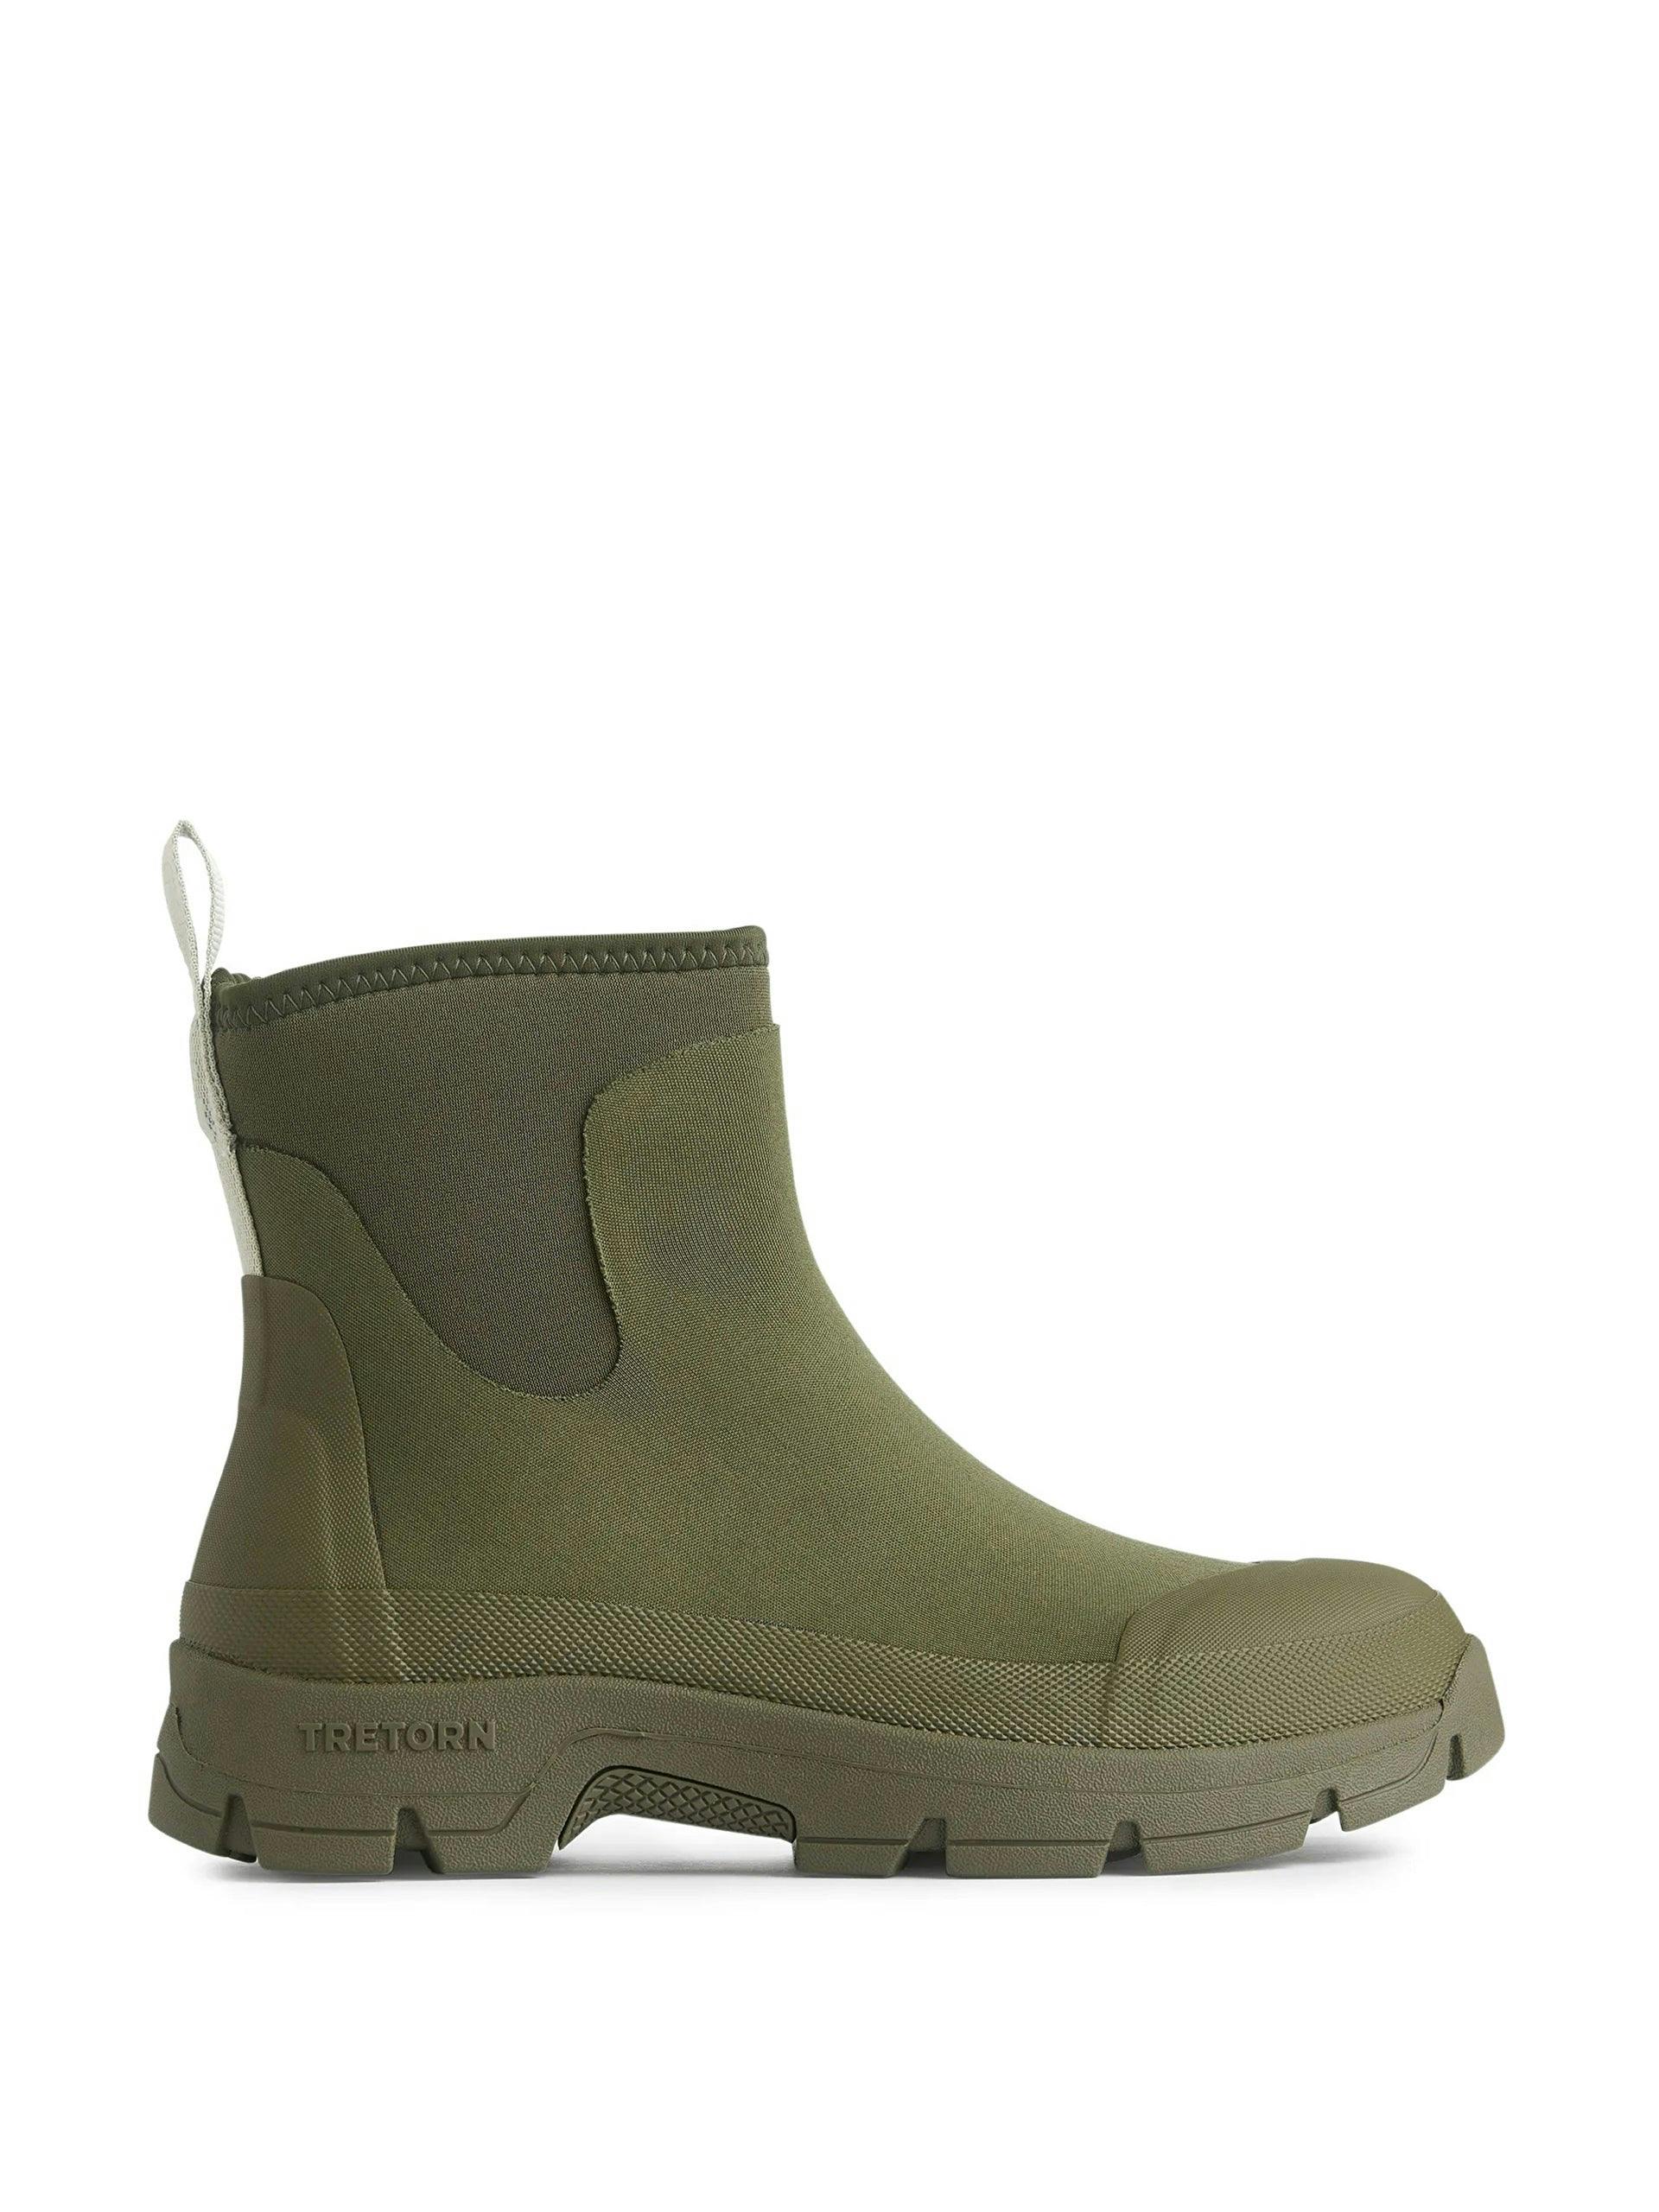 Green waterproof boots